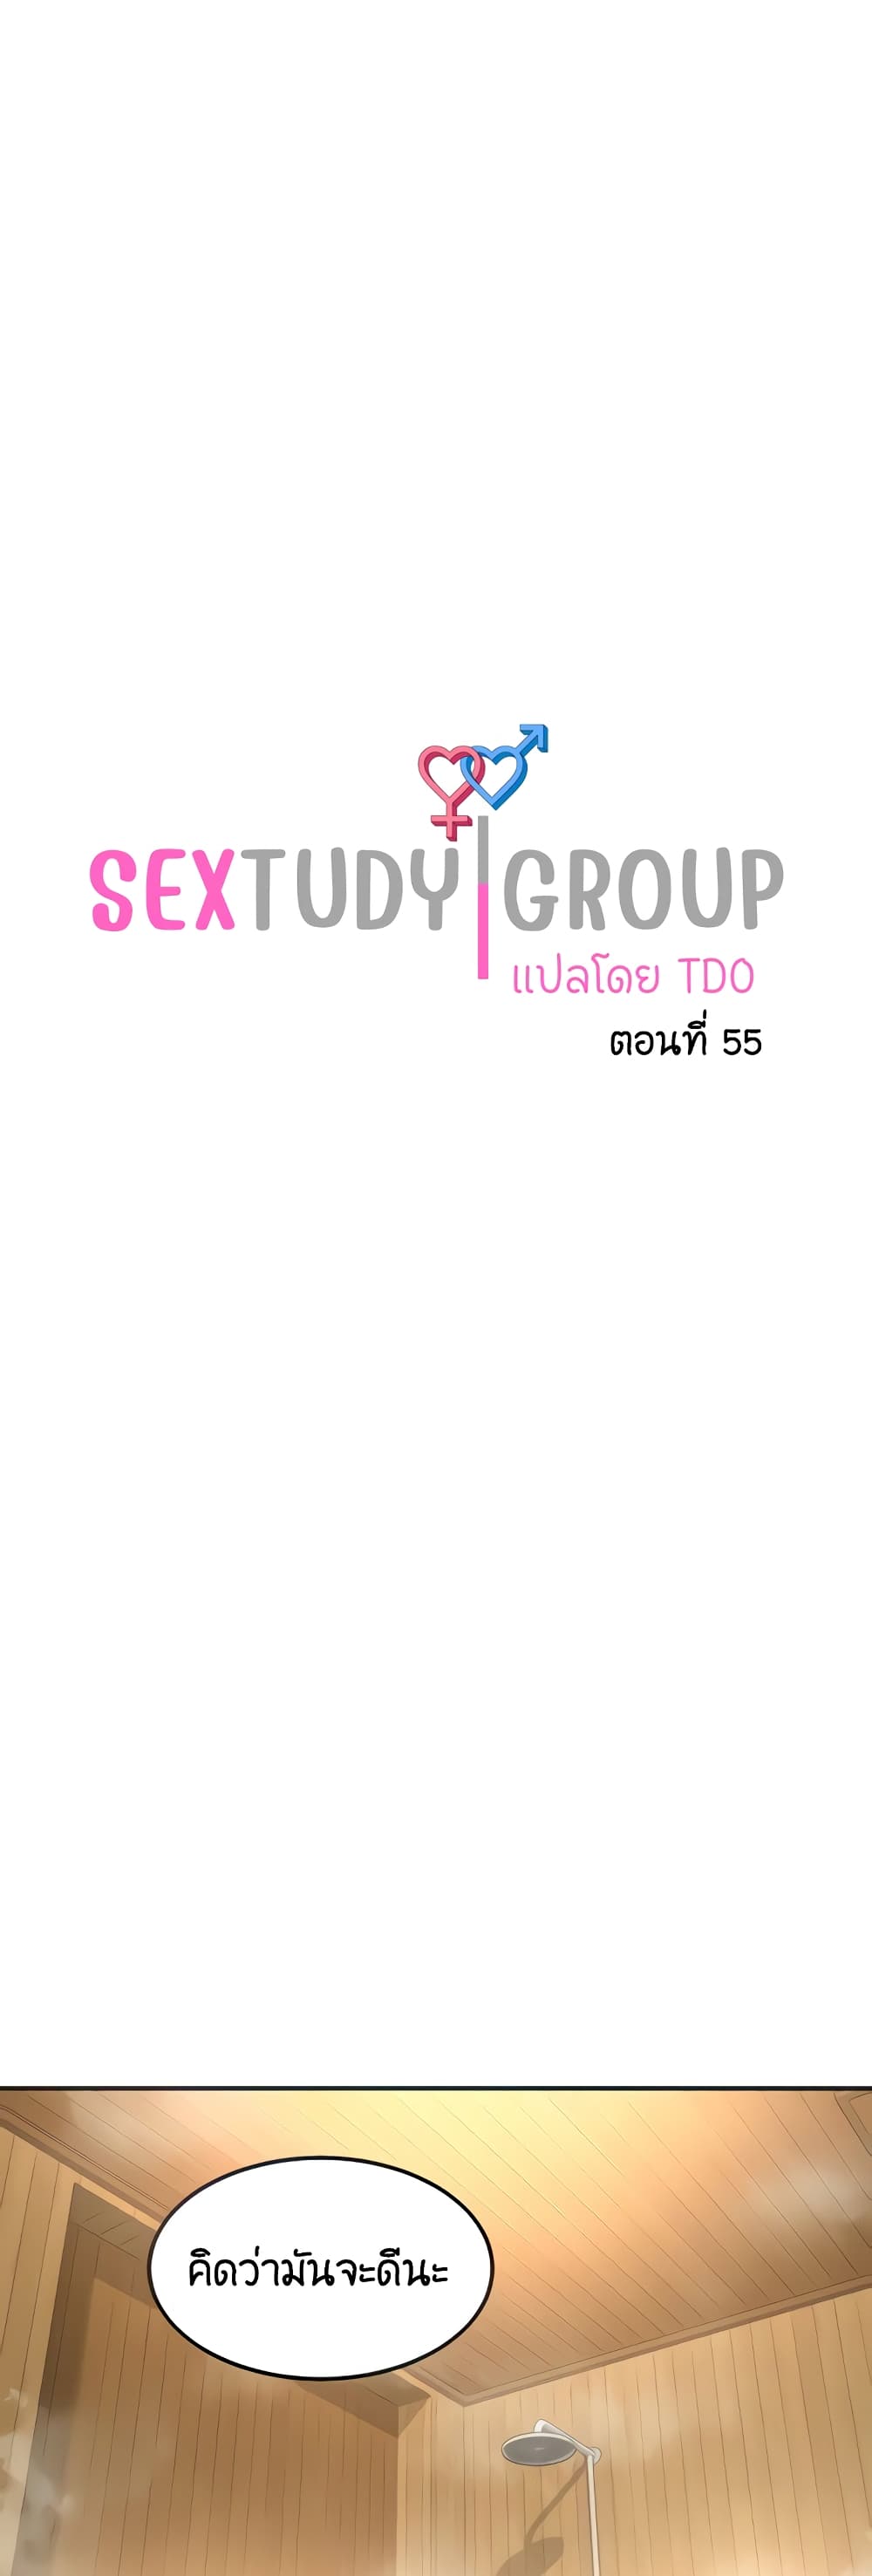 Sextudy Group 55 01